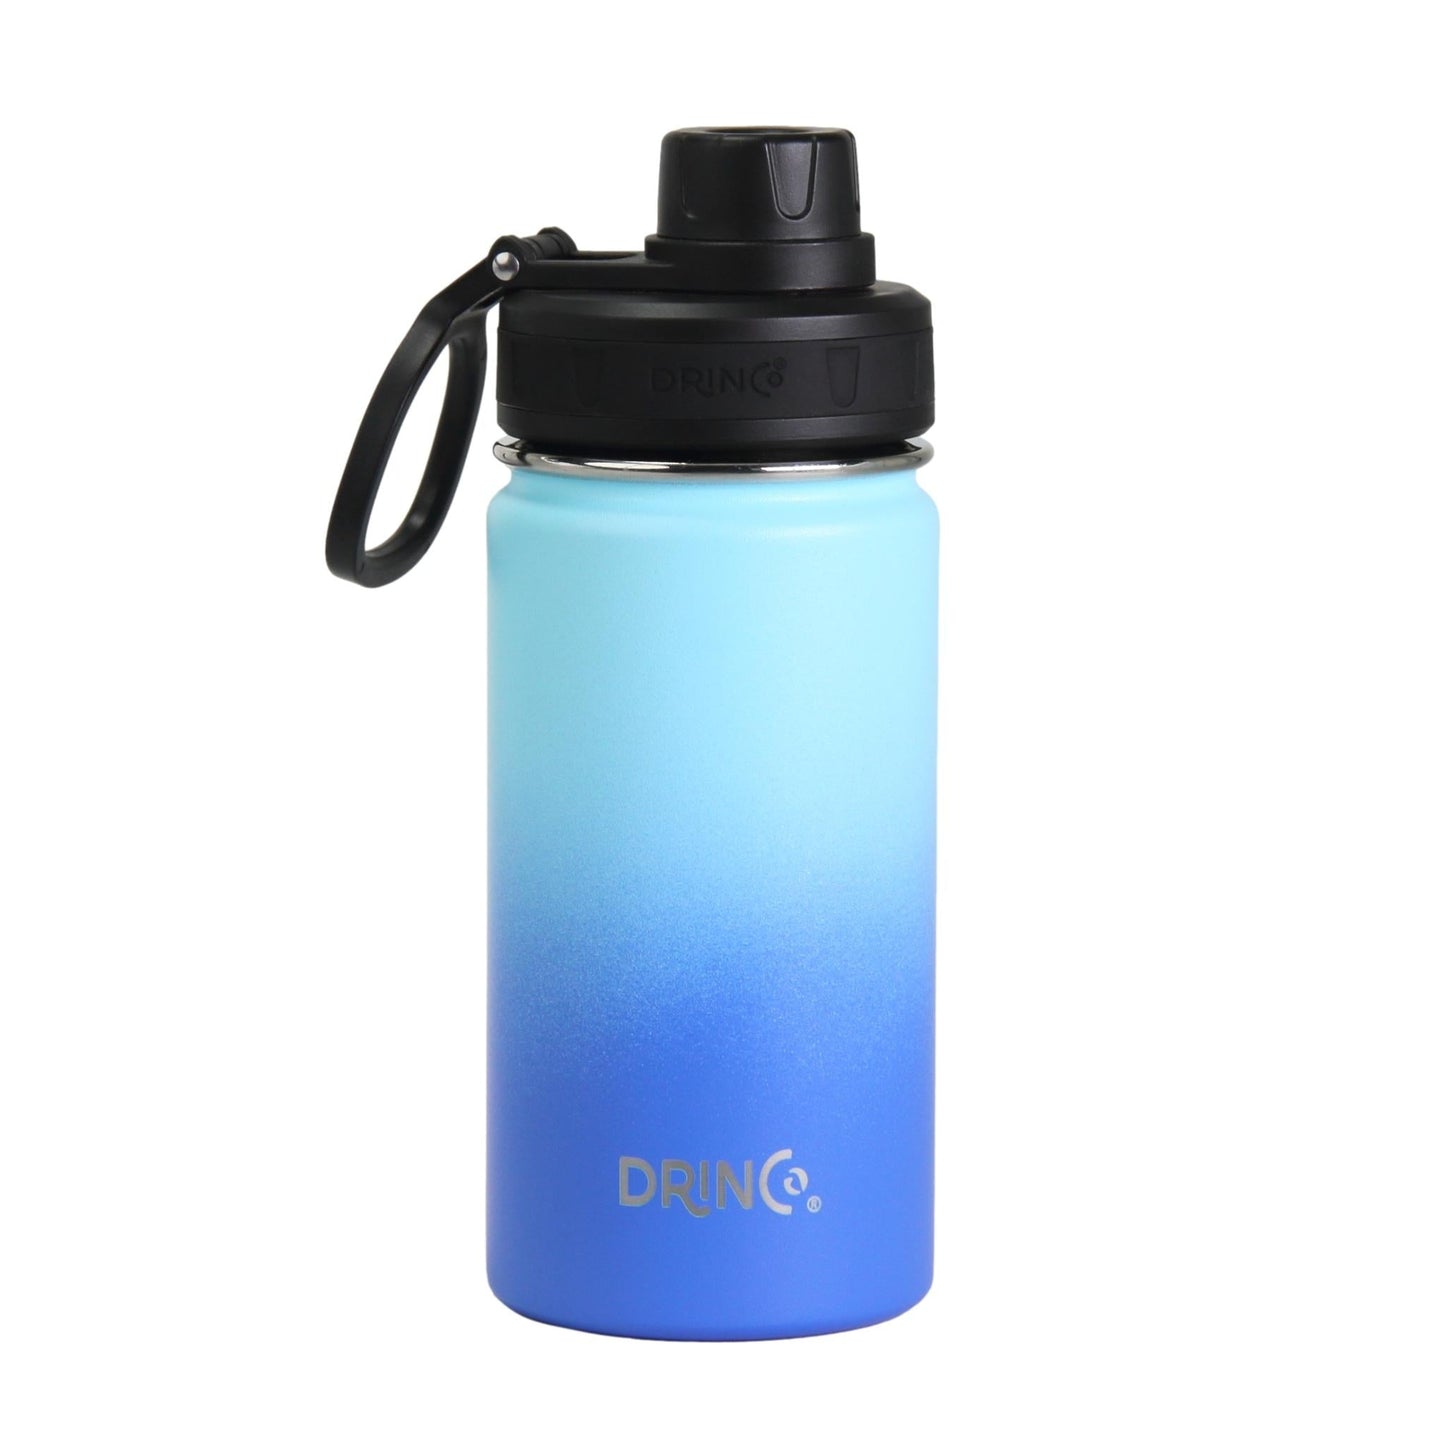 14oz Stainless Steel Sport Water Bottle - Saltwater Bodega